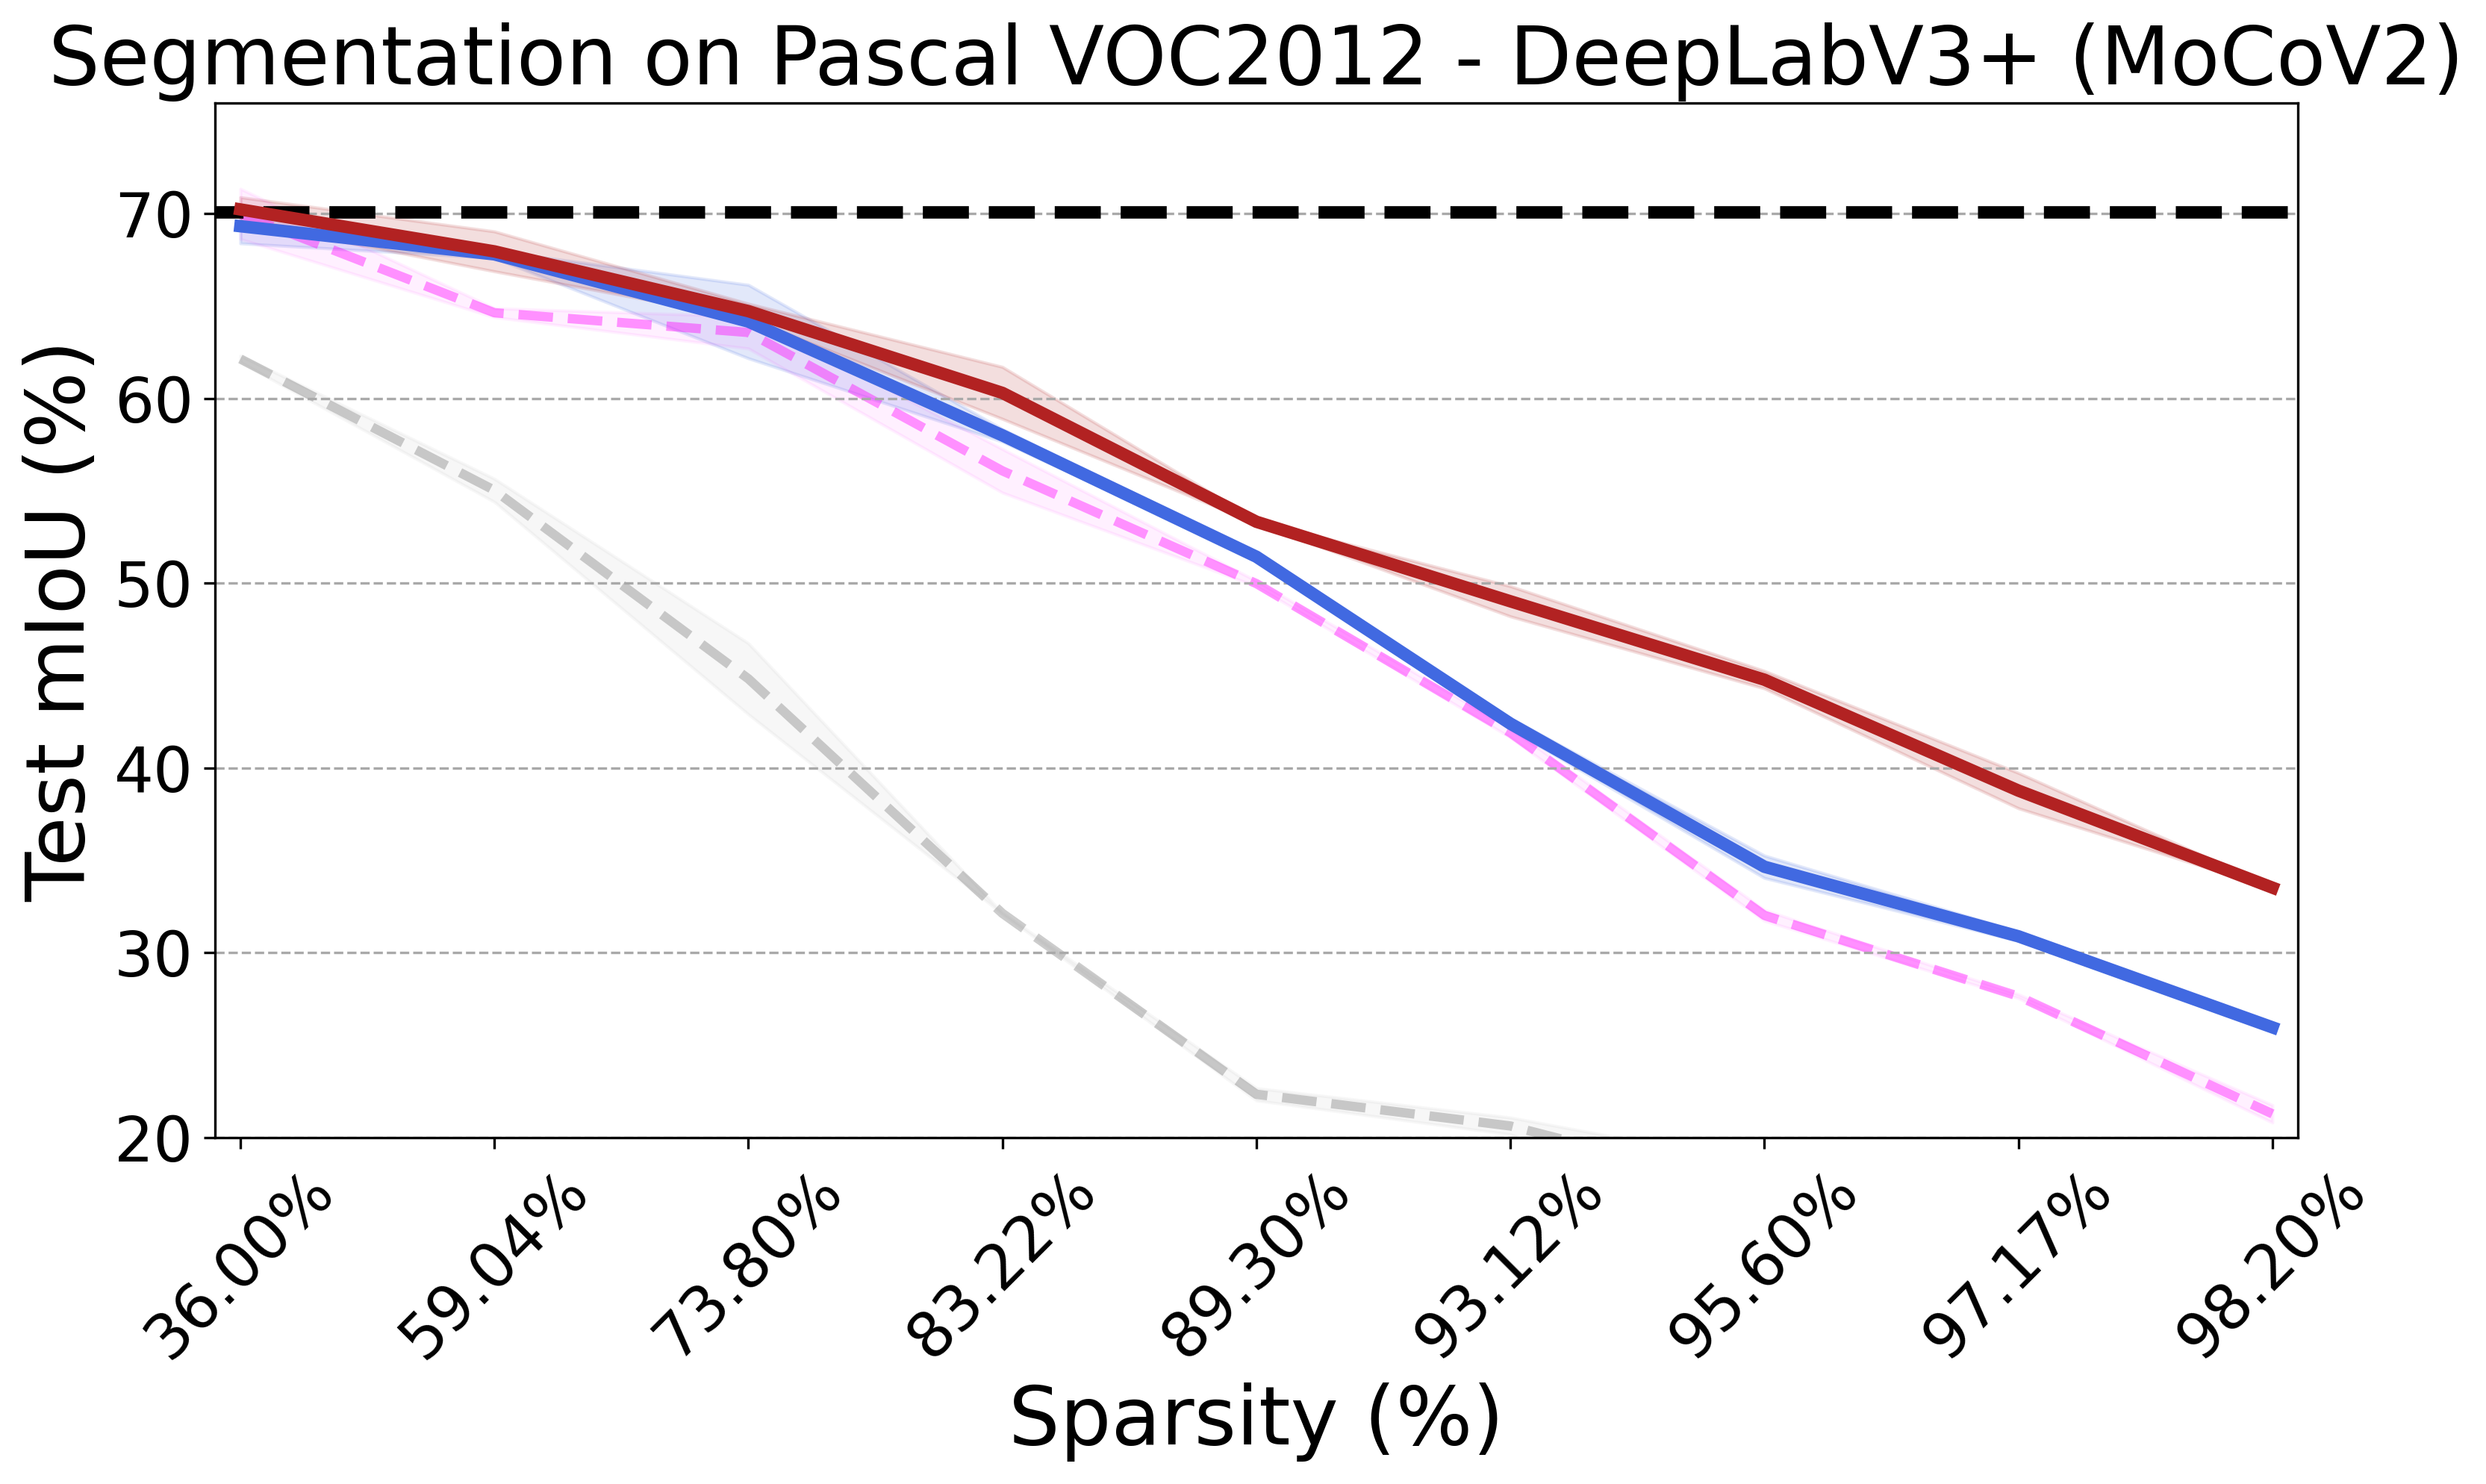 Path eXclusion (PX) on Pascal VOC 2012 - ResNet50 DeepLabV3+ MoCoV2 pretrain.